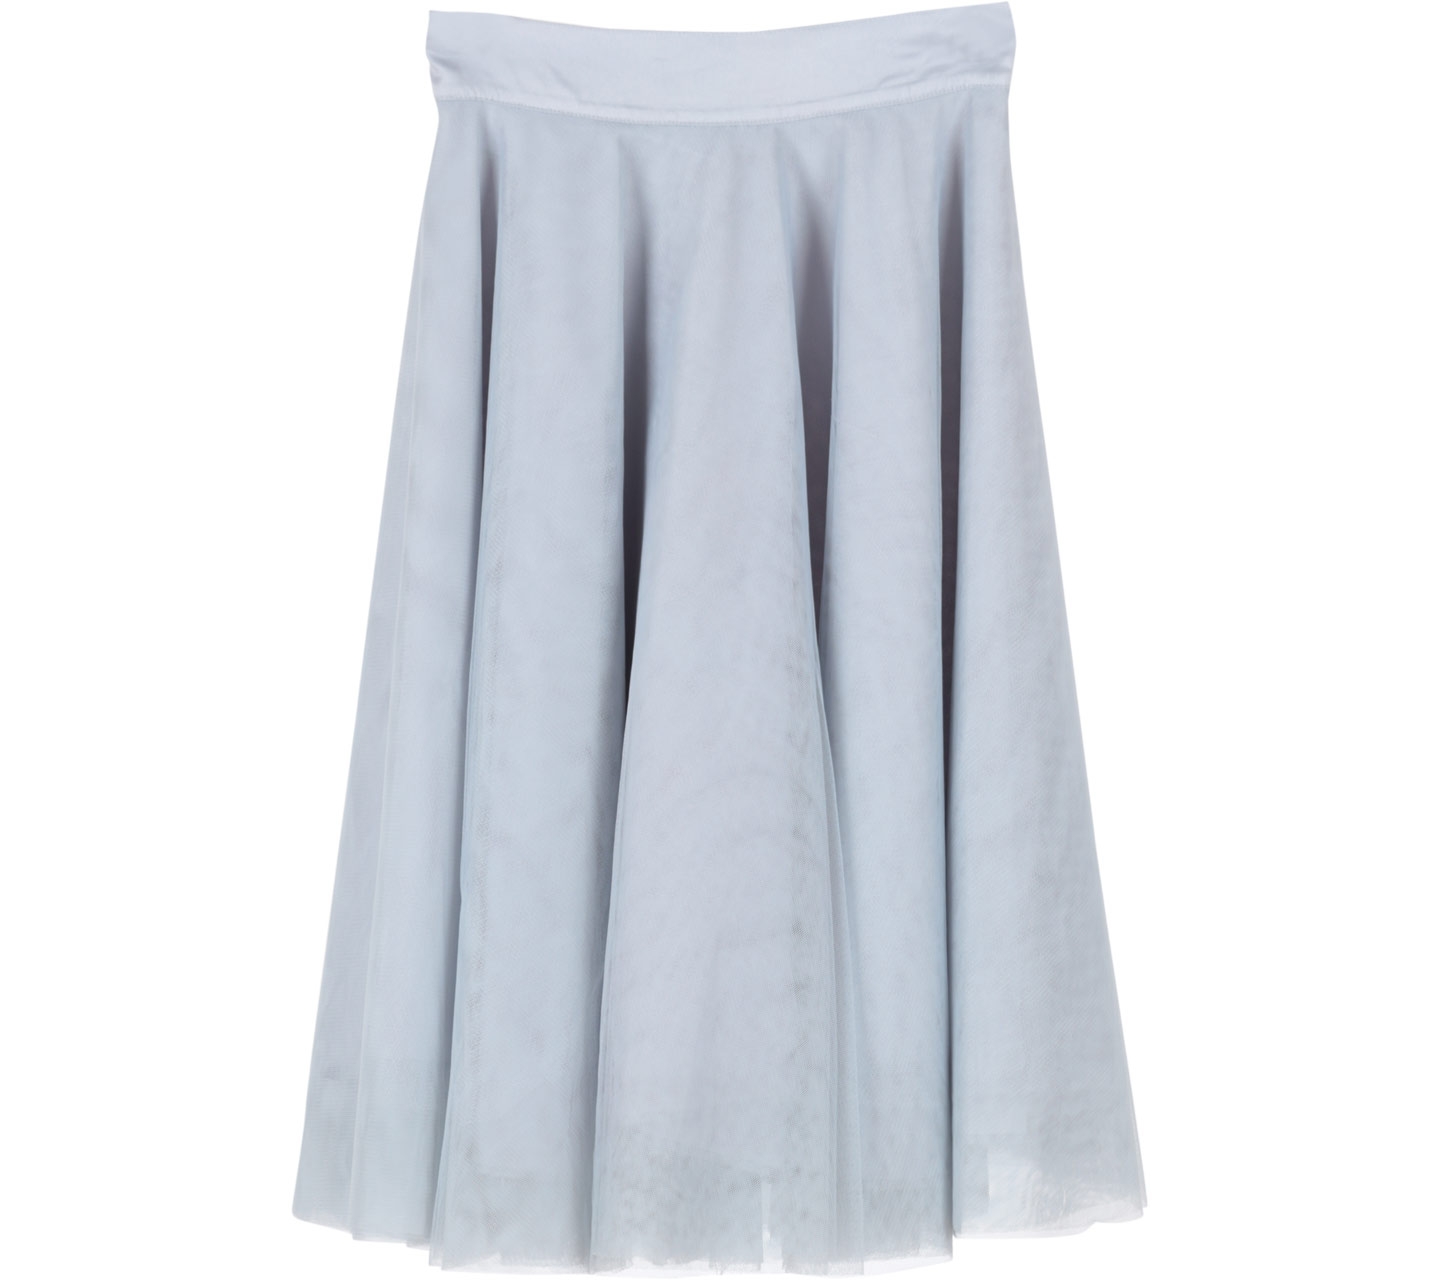 Maniere-E Grey Tulle Skirt